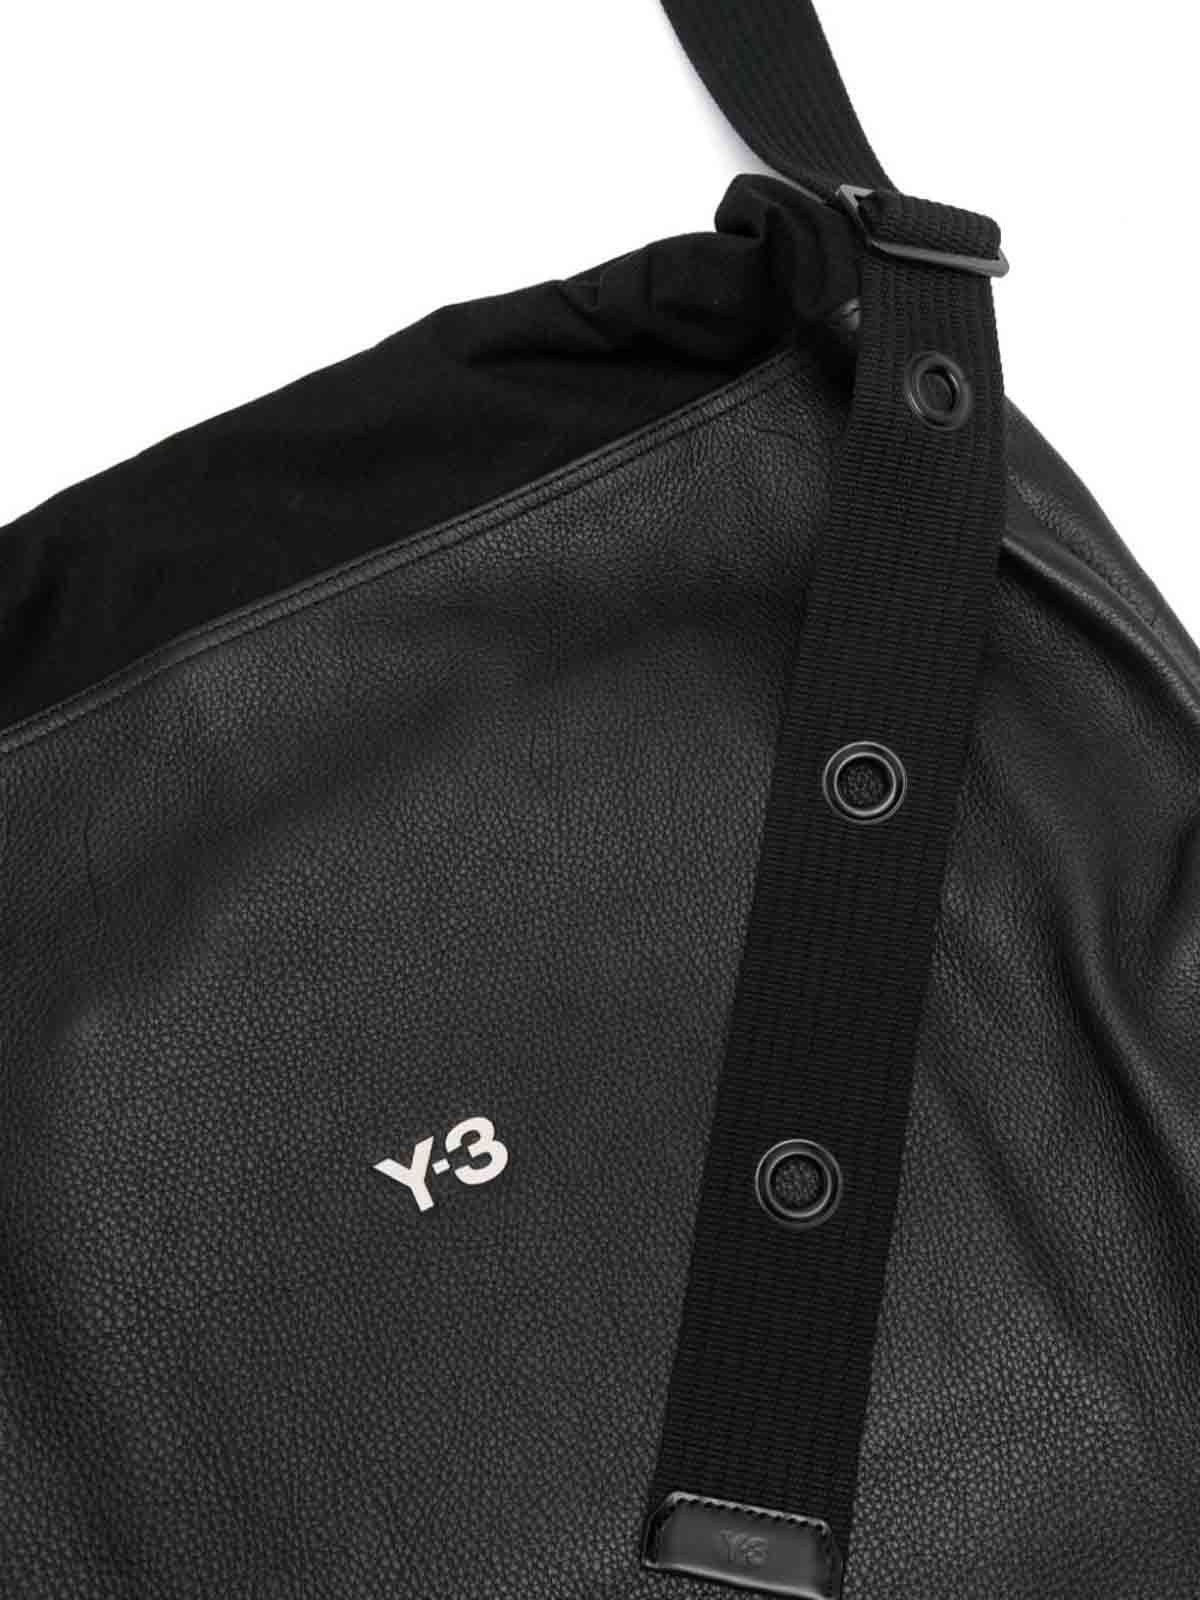 Cross body bags Y-3 - Y-3 lux gym bag - IJ9877BLACK